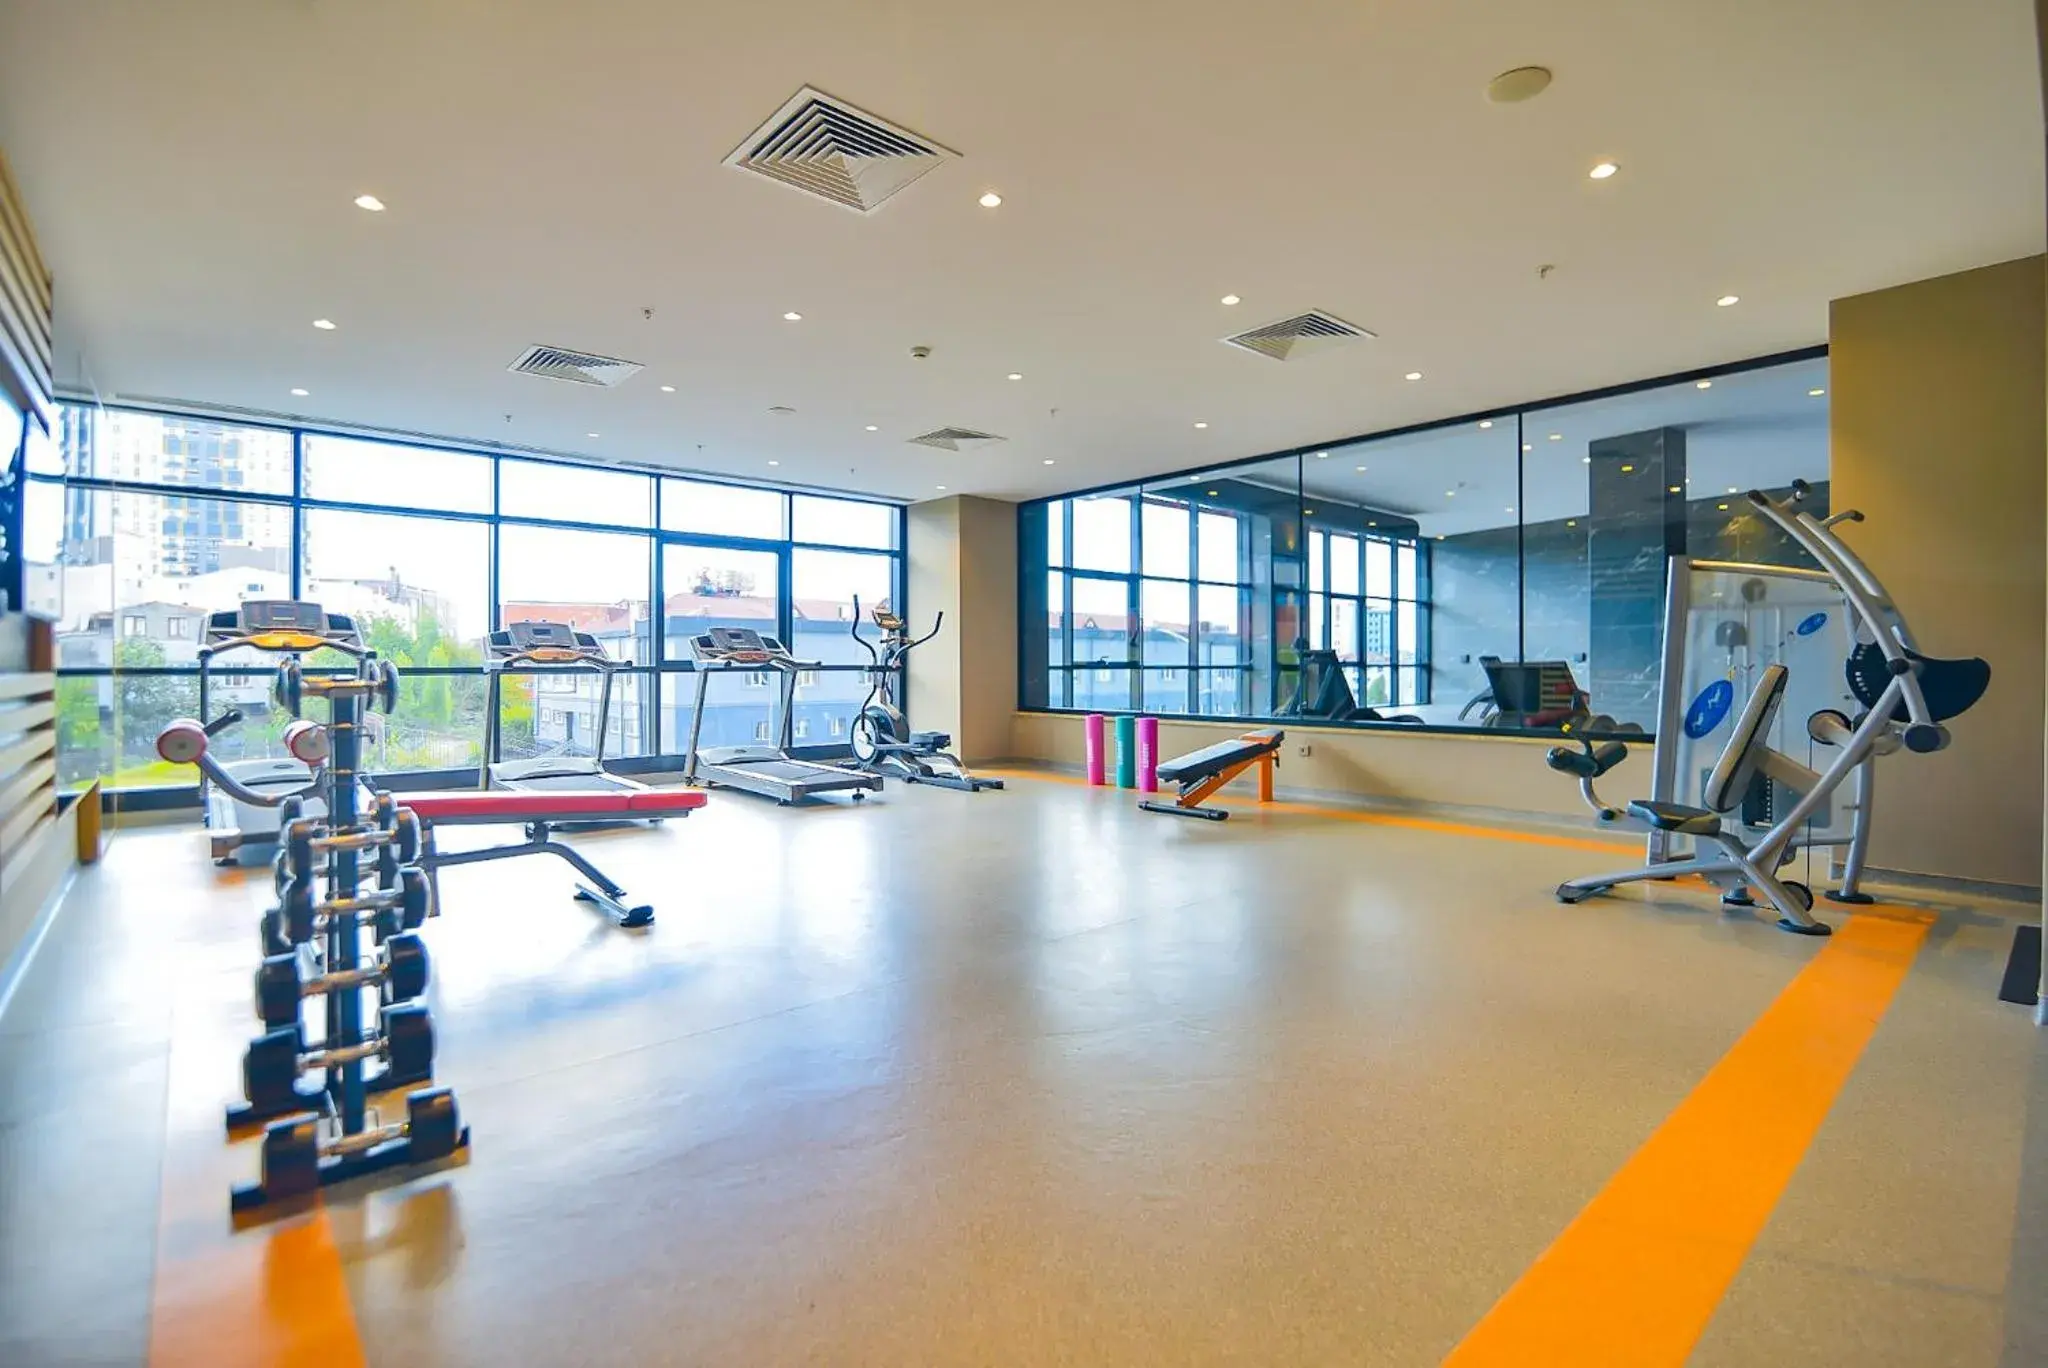 Fitness centre/facilities, Fitness Center/Facilities in QUA COMFORT HOTEL